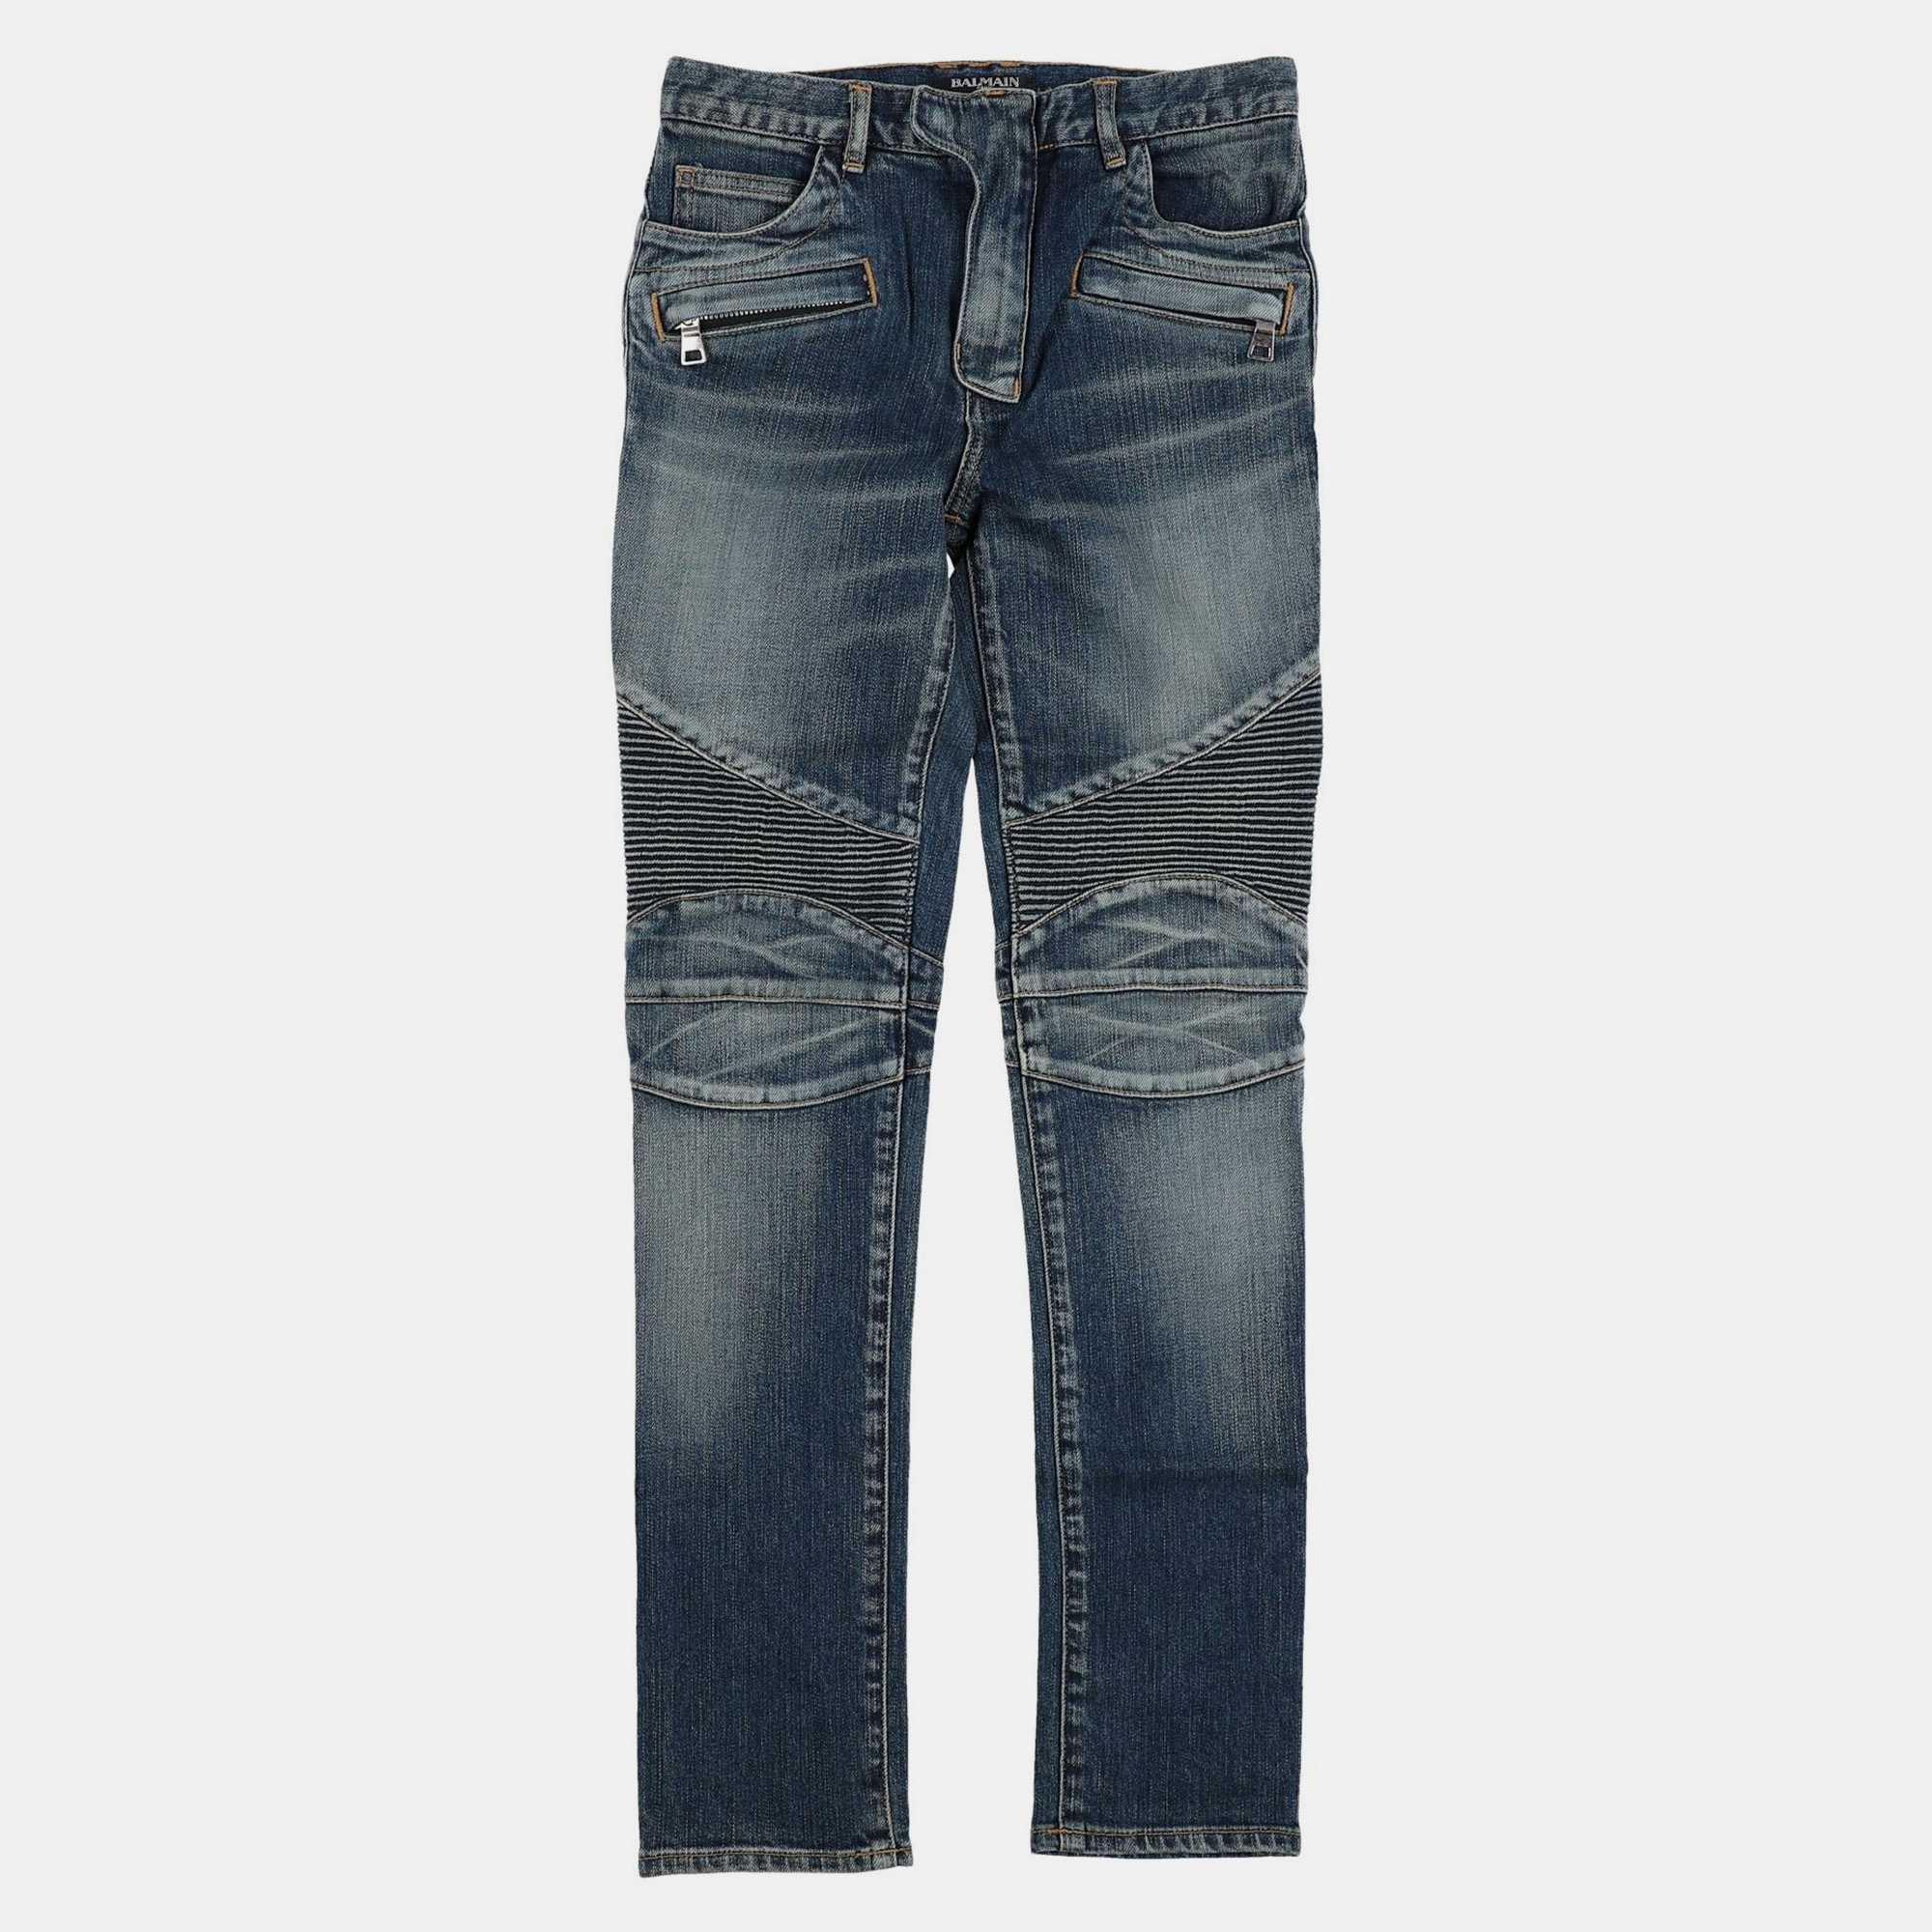 Balmain blue washed denim jeans size 6a